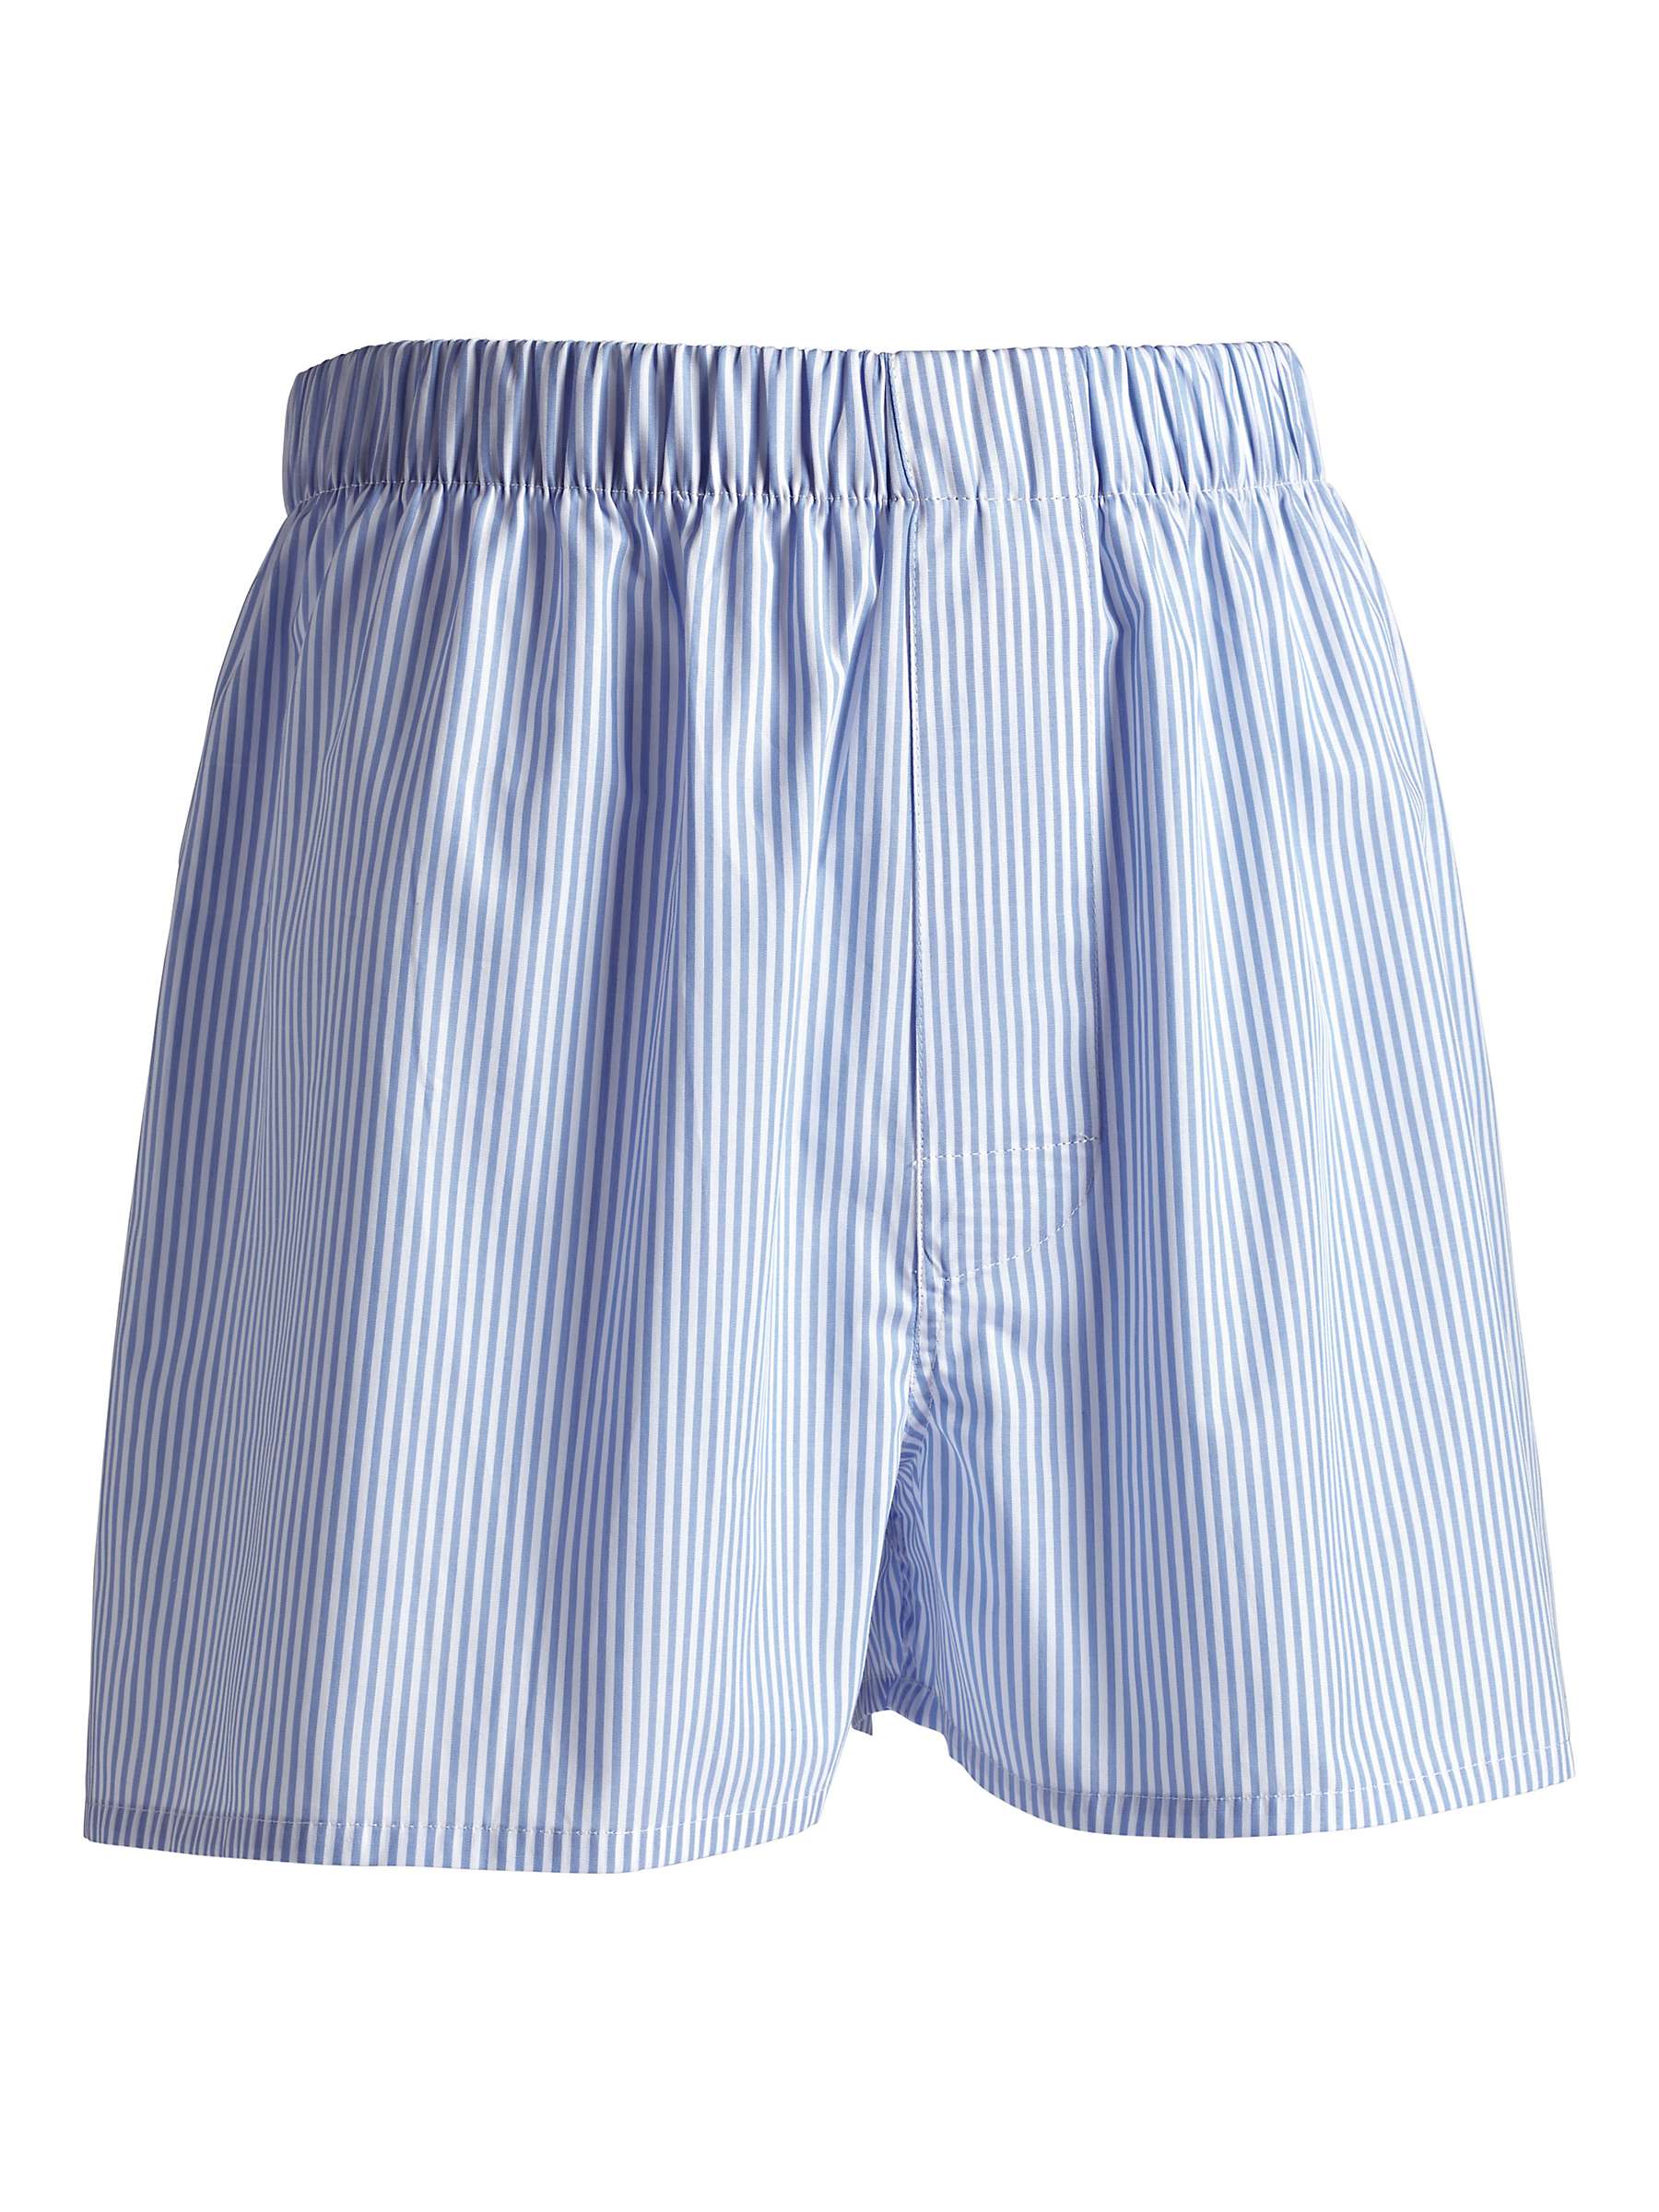 Buy Charles Tyrwhitt Stripe Print Cotton Boxer Shorts, Cornflower Online at johnlewis.com